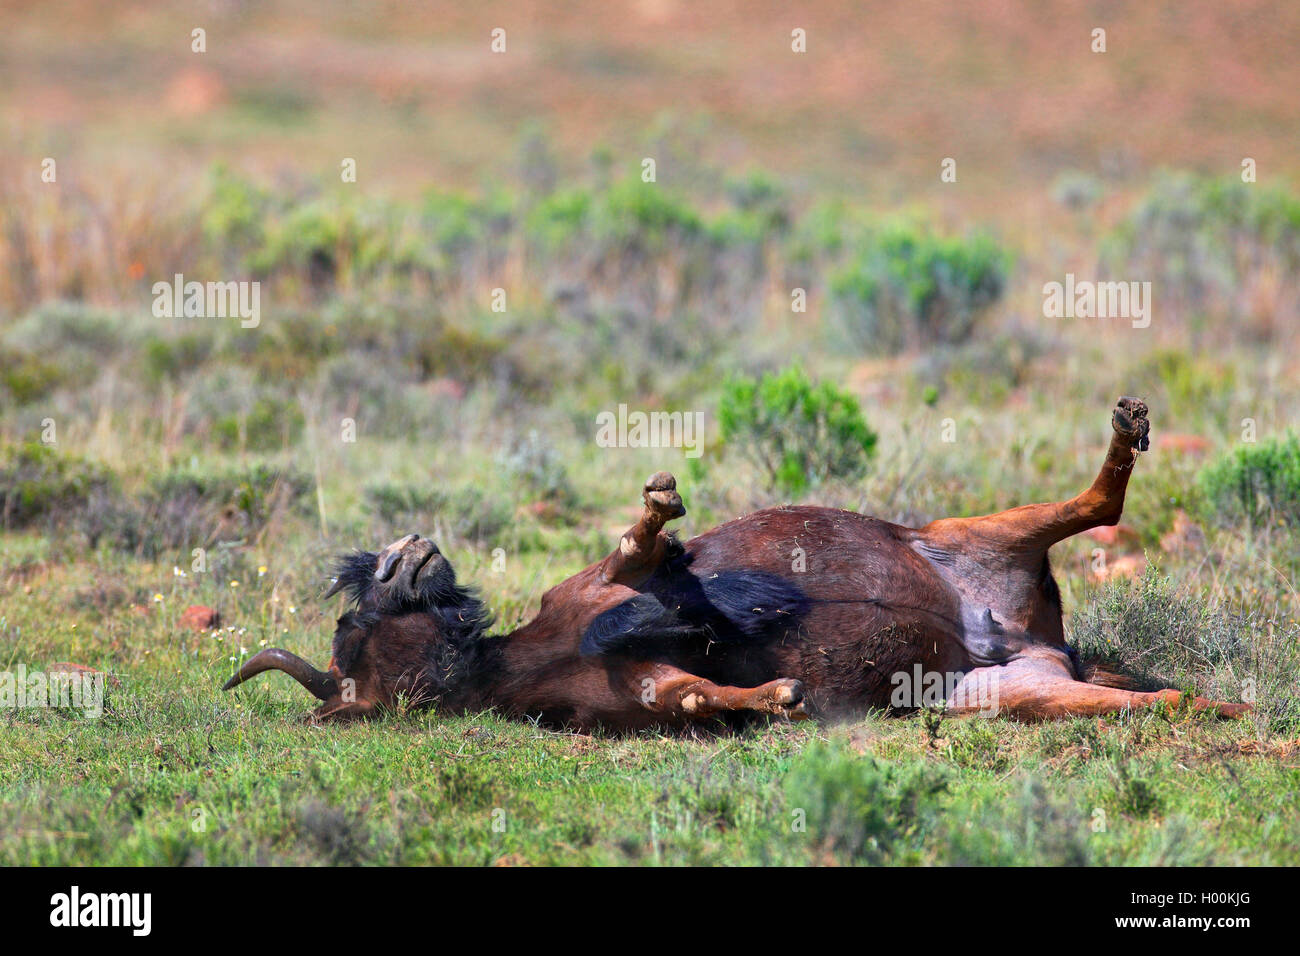 black wildebeest, white-tailed gnu (Connochaetes gnou), dust bathing for grooming, South Africa, Eastern Cape, Mountain Zebra National Park Stock Photo